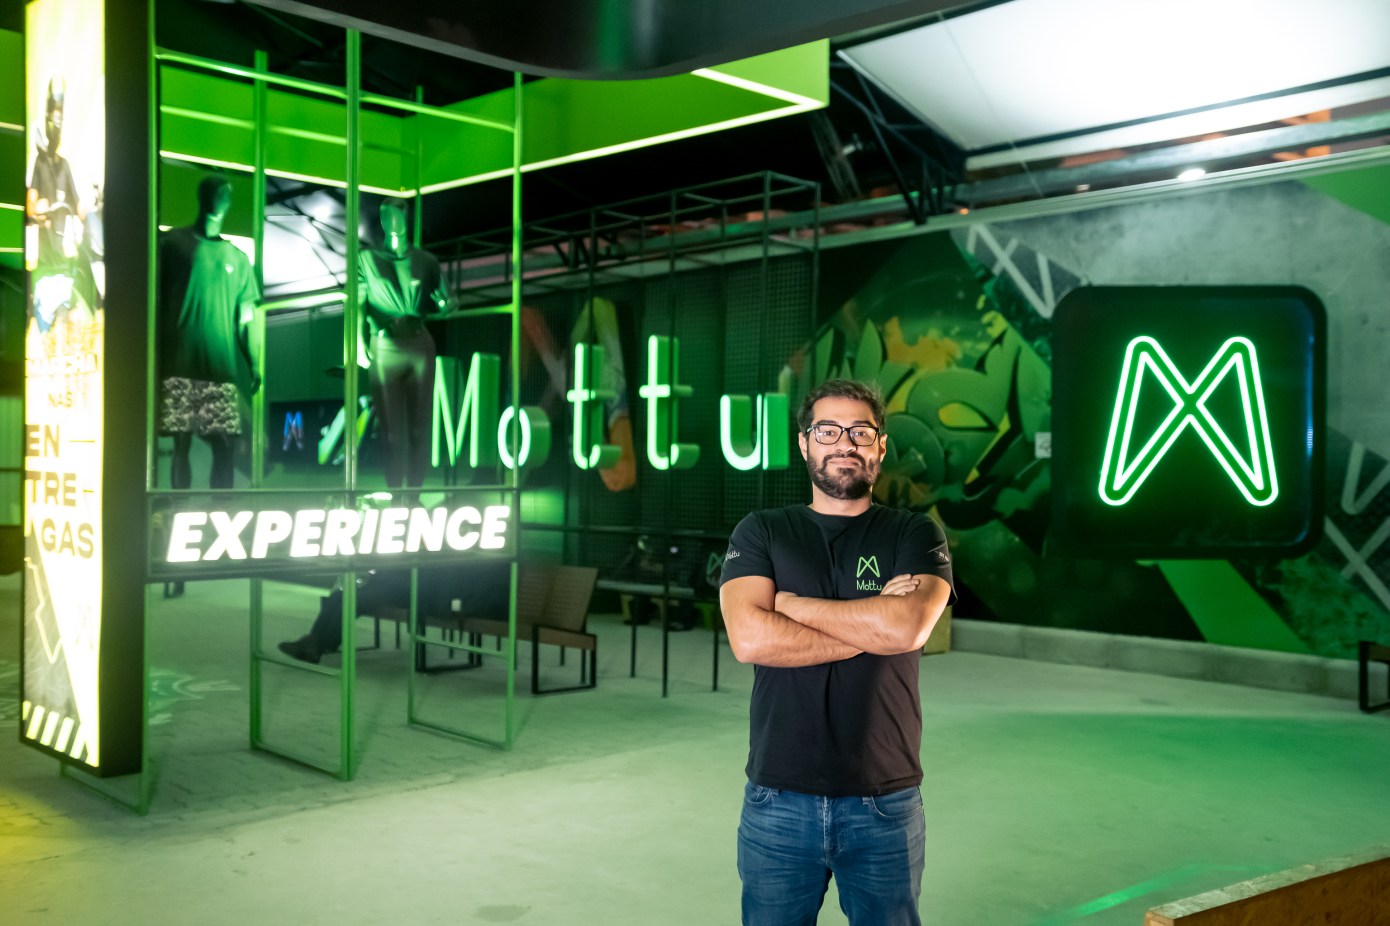 Brazilian motorcycle rental startup Mottu raises M